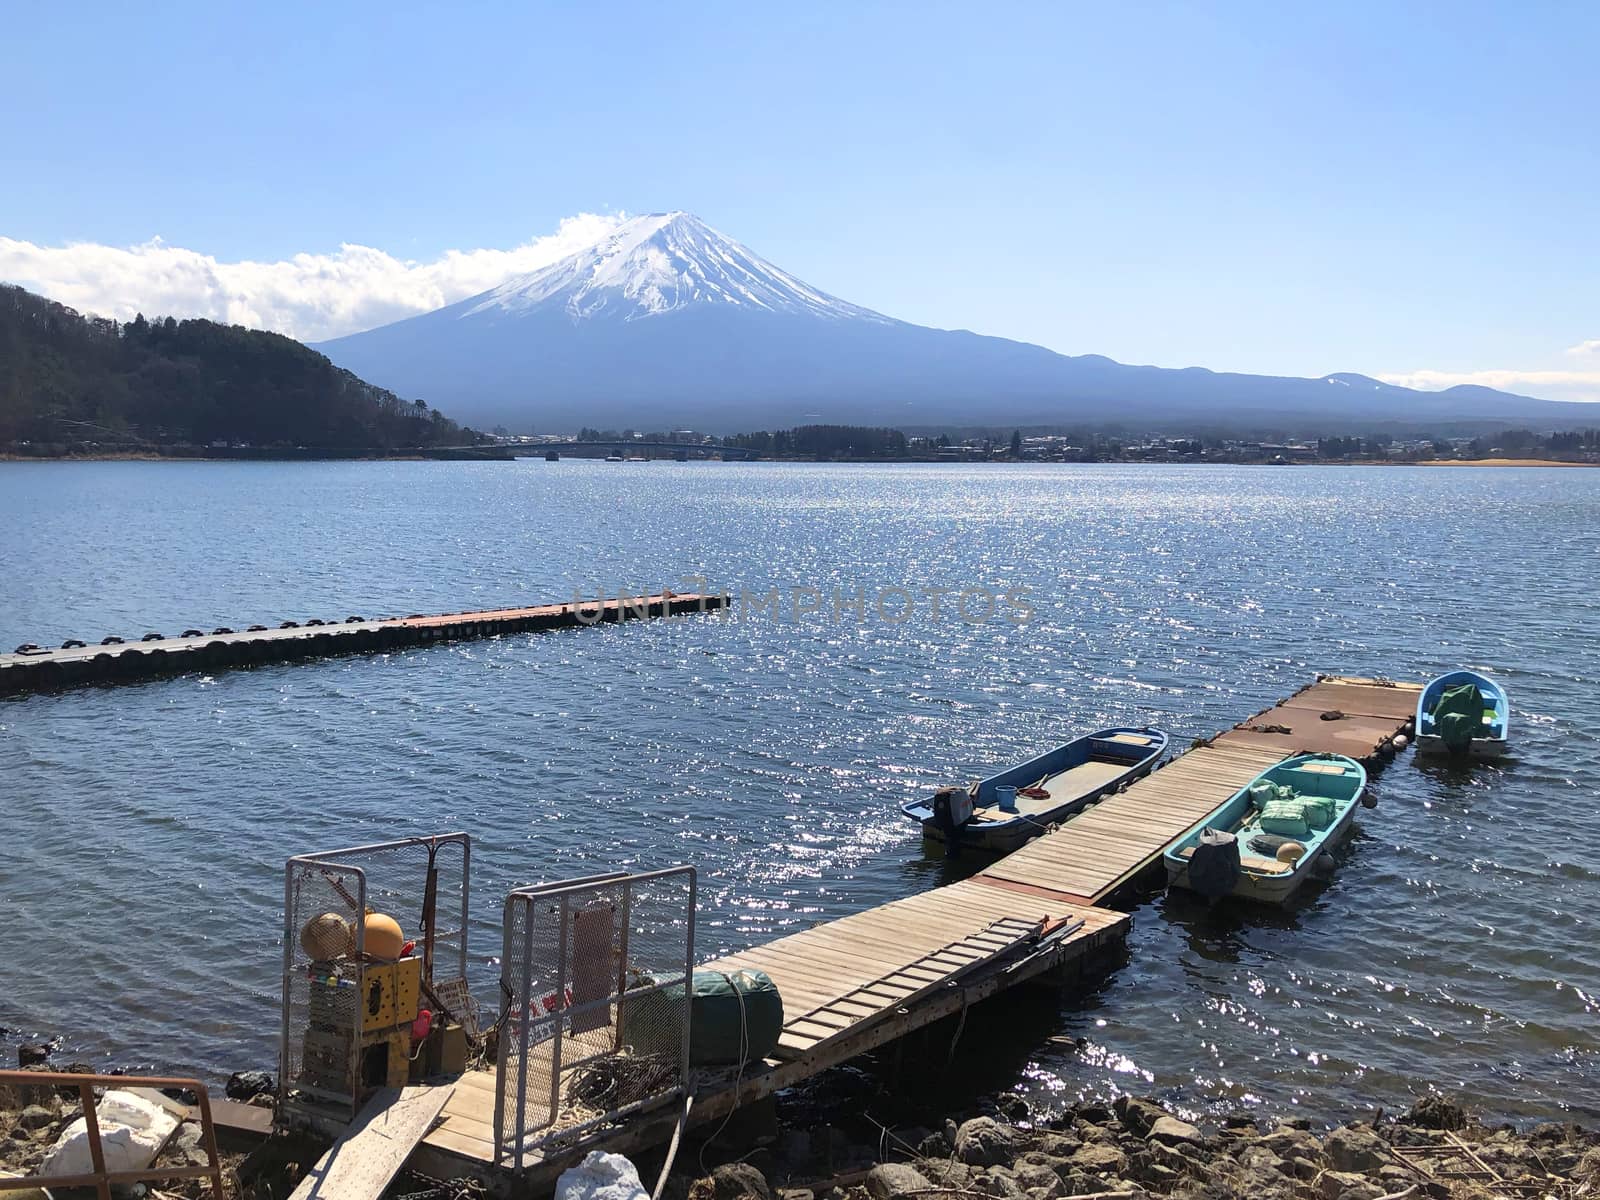 Beautiful view of  Mountain Fuji and Lake Kawaguchiko in Japan